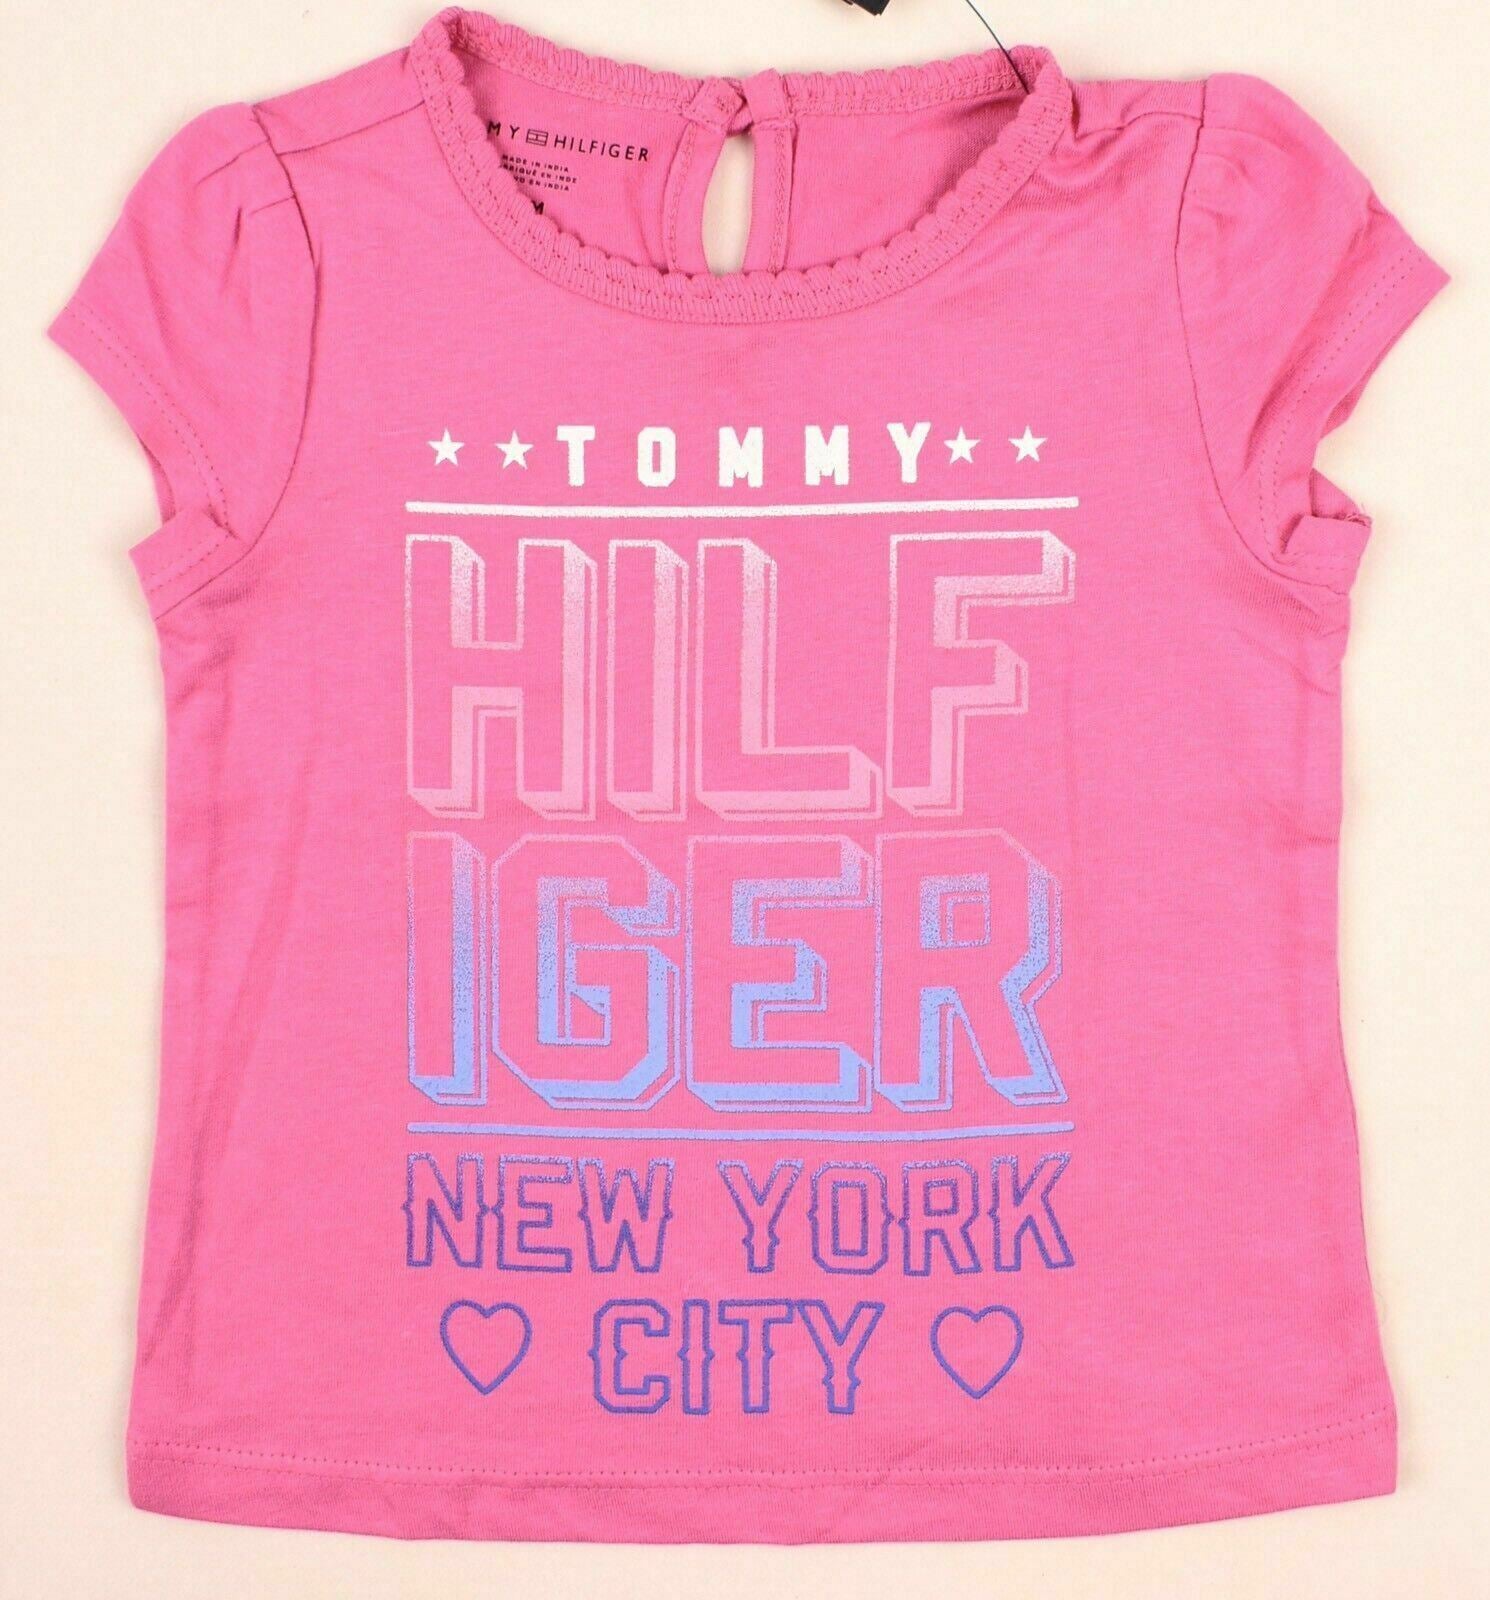 TOMMY HILFIGER Baby Girls' Logo Print Top, Pink, 3 m /6 m /12 m /18 m /24 months